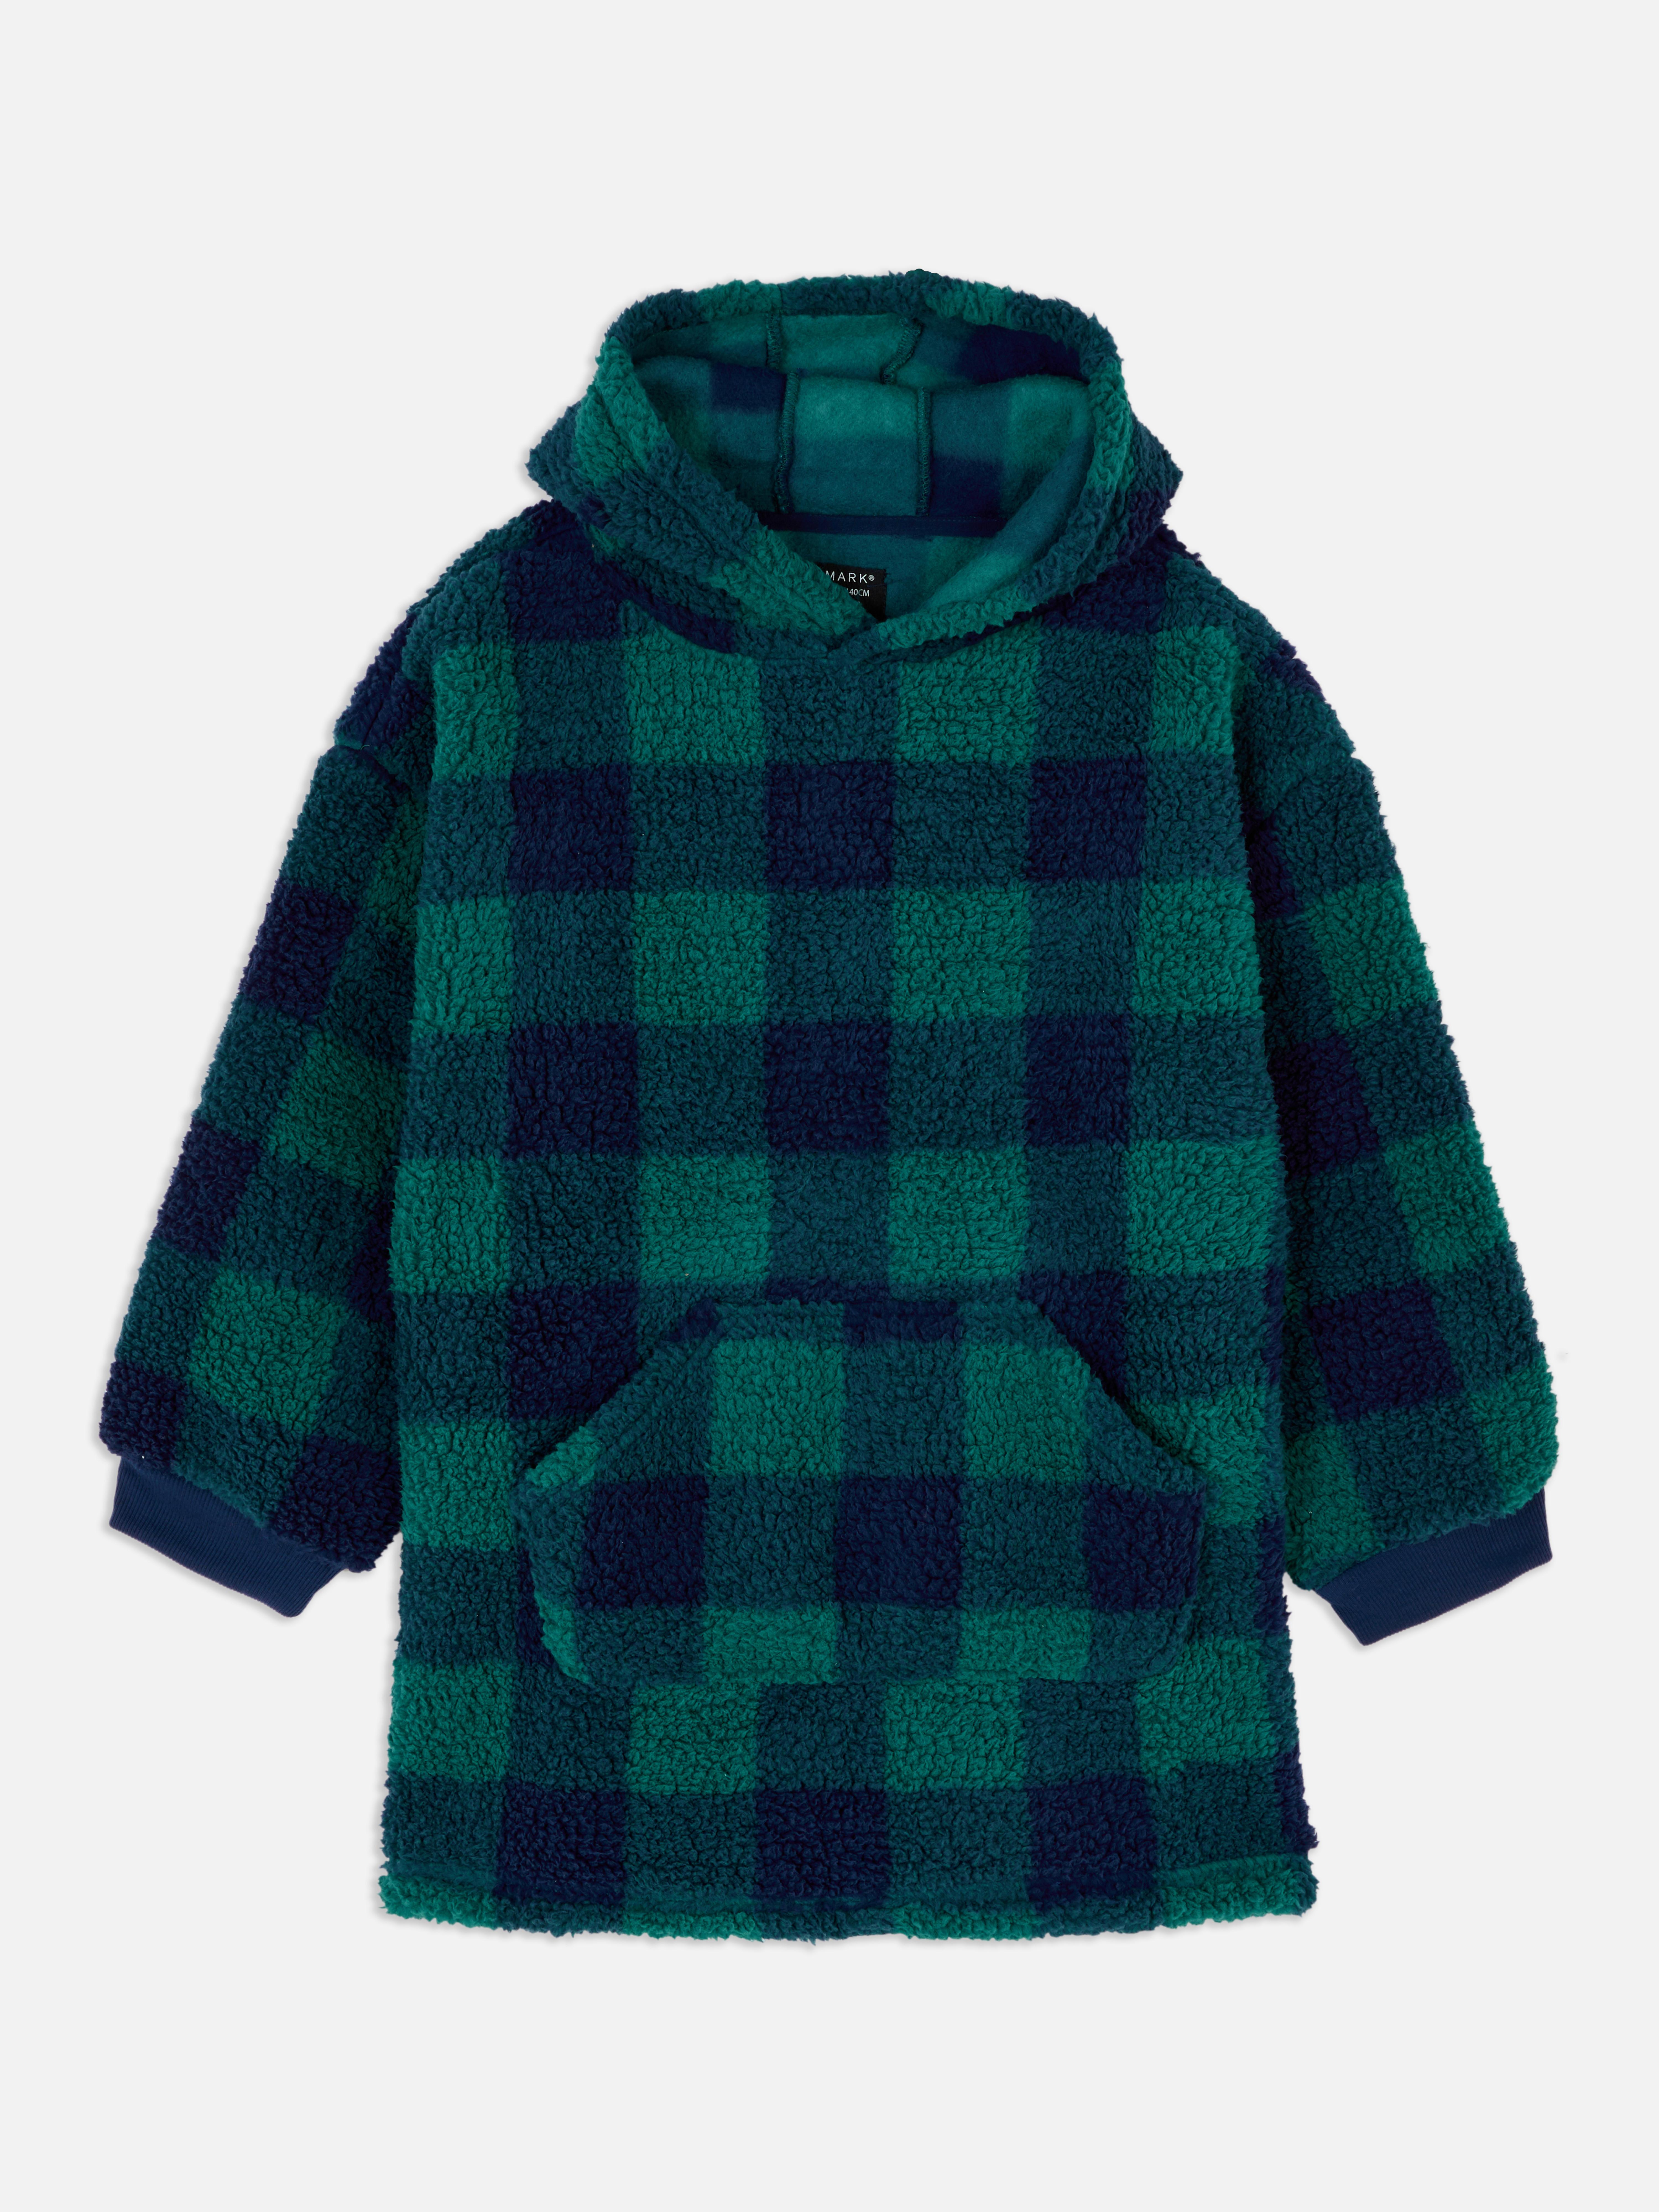 KINDER Pullovers & Sweatshirts Pelz Primark Pullover Rabatt 50 % Rosa 6-9M 